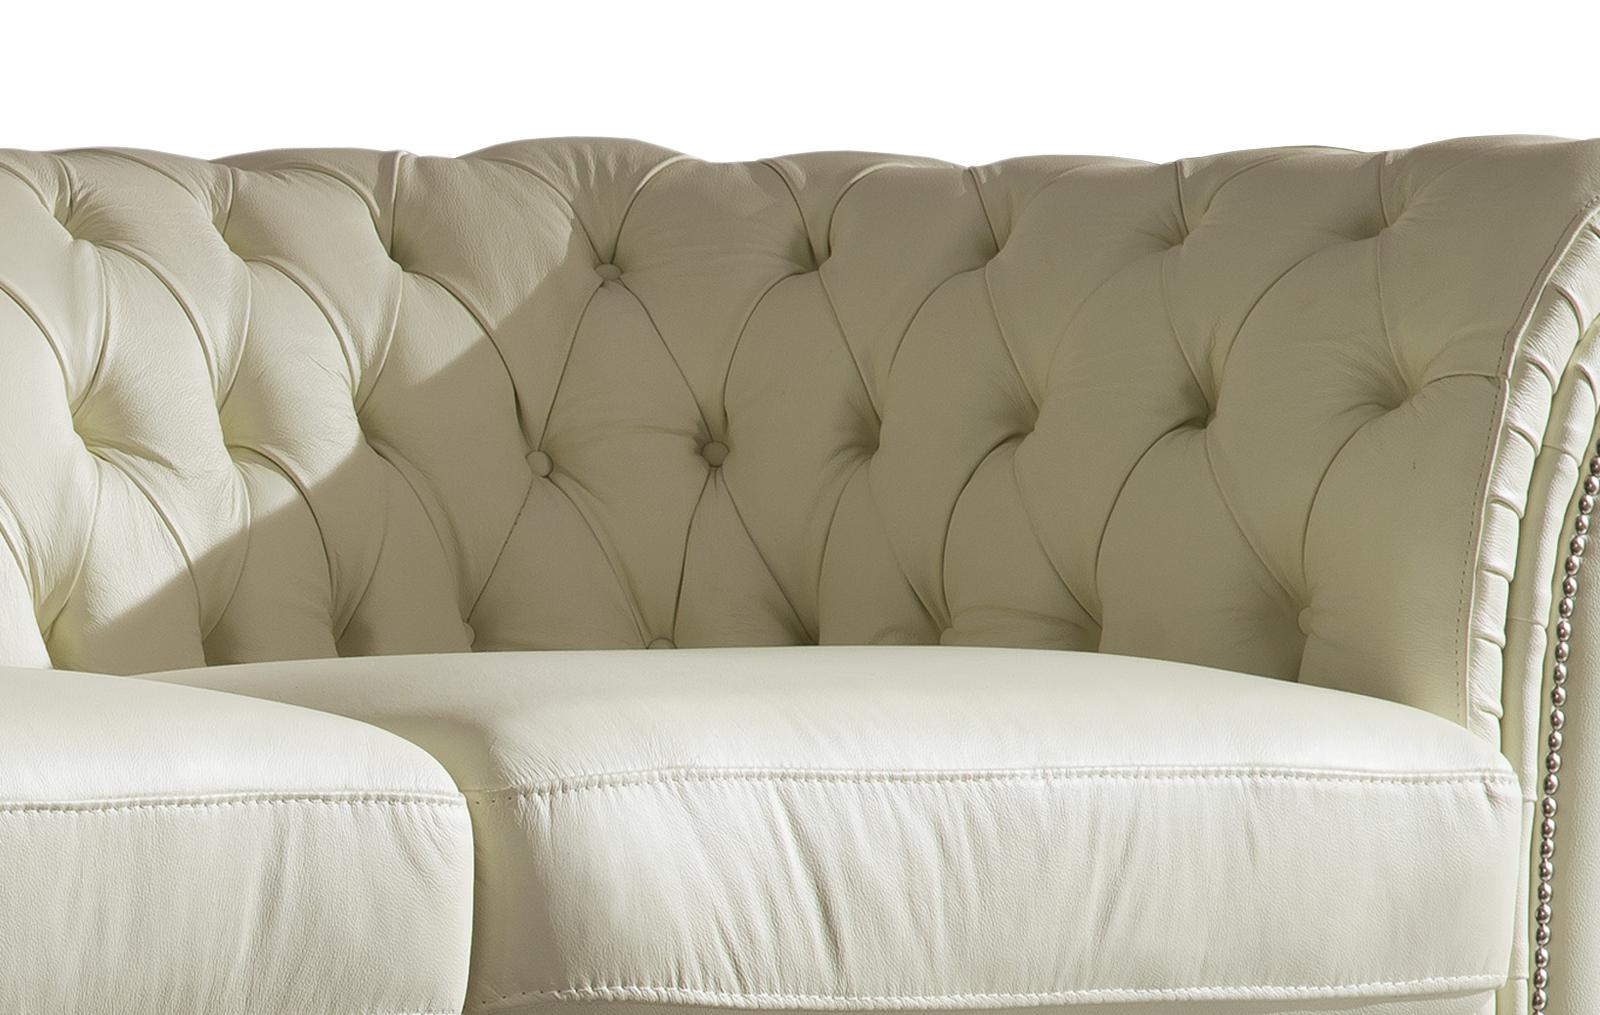 

    
 Order  Ivory Genuine Italian Leather Tufted Sofa & Loveset Set 2Pcs Contemporary Luca Home
